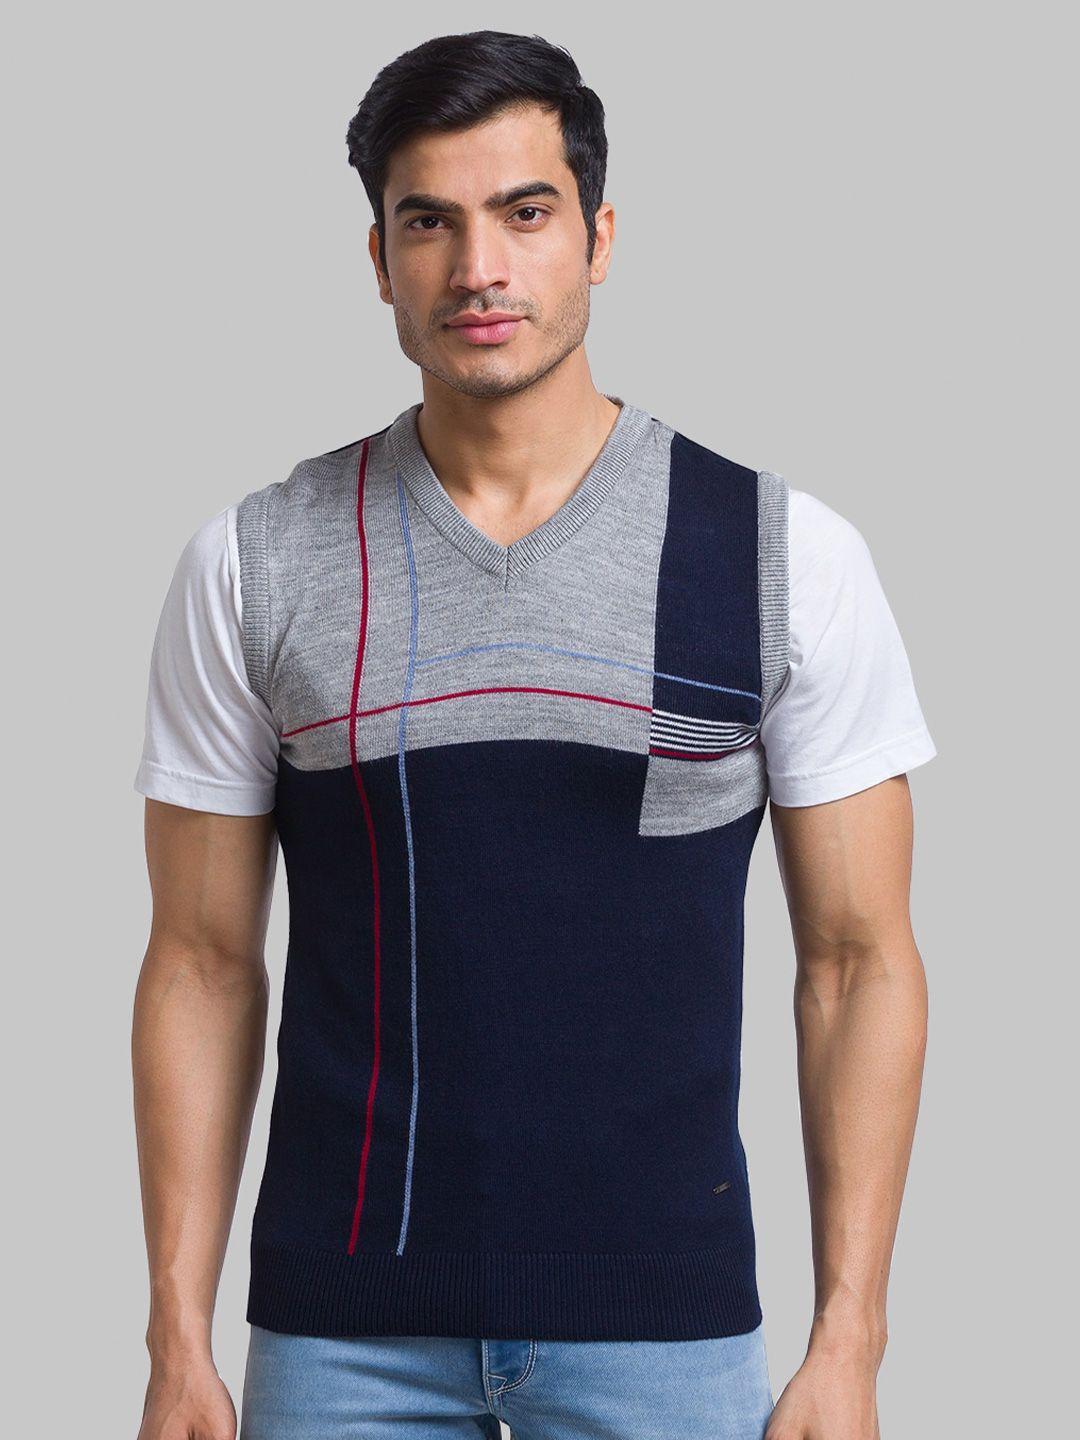 parx-men-colourblocked-knitted-acrylic-sweater-vest